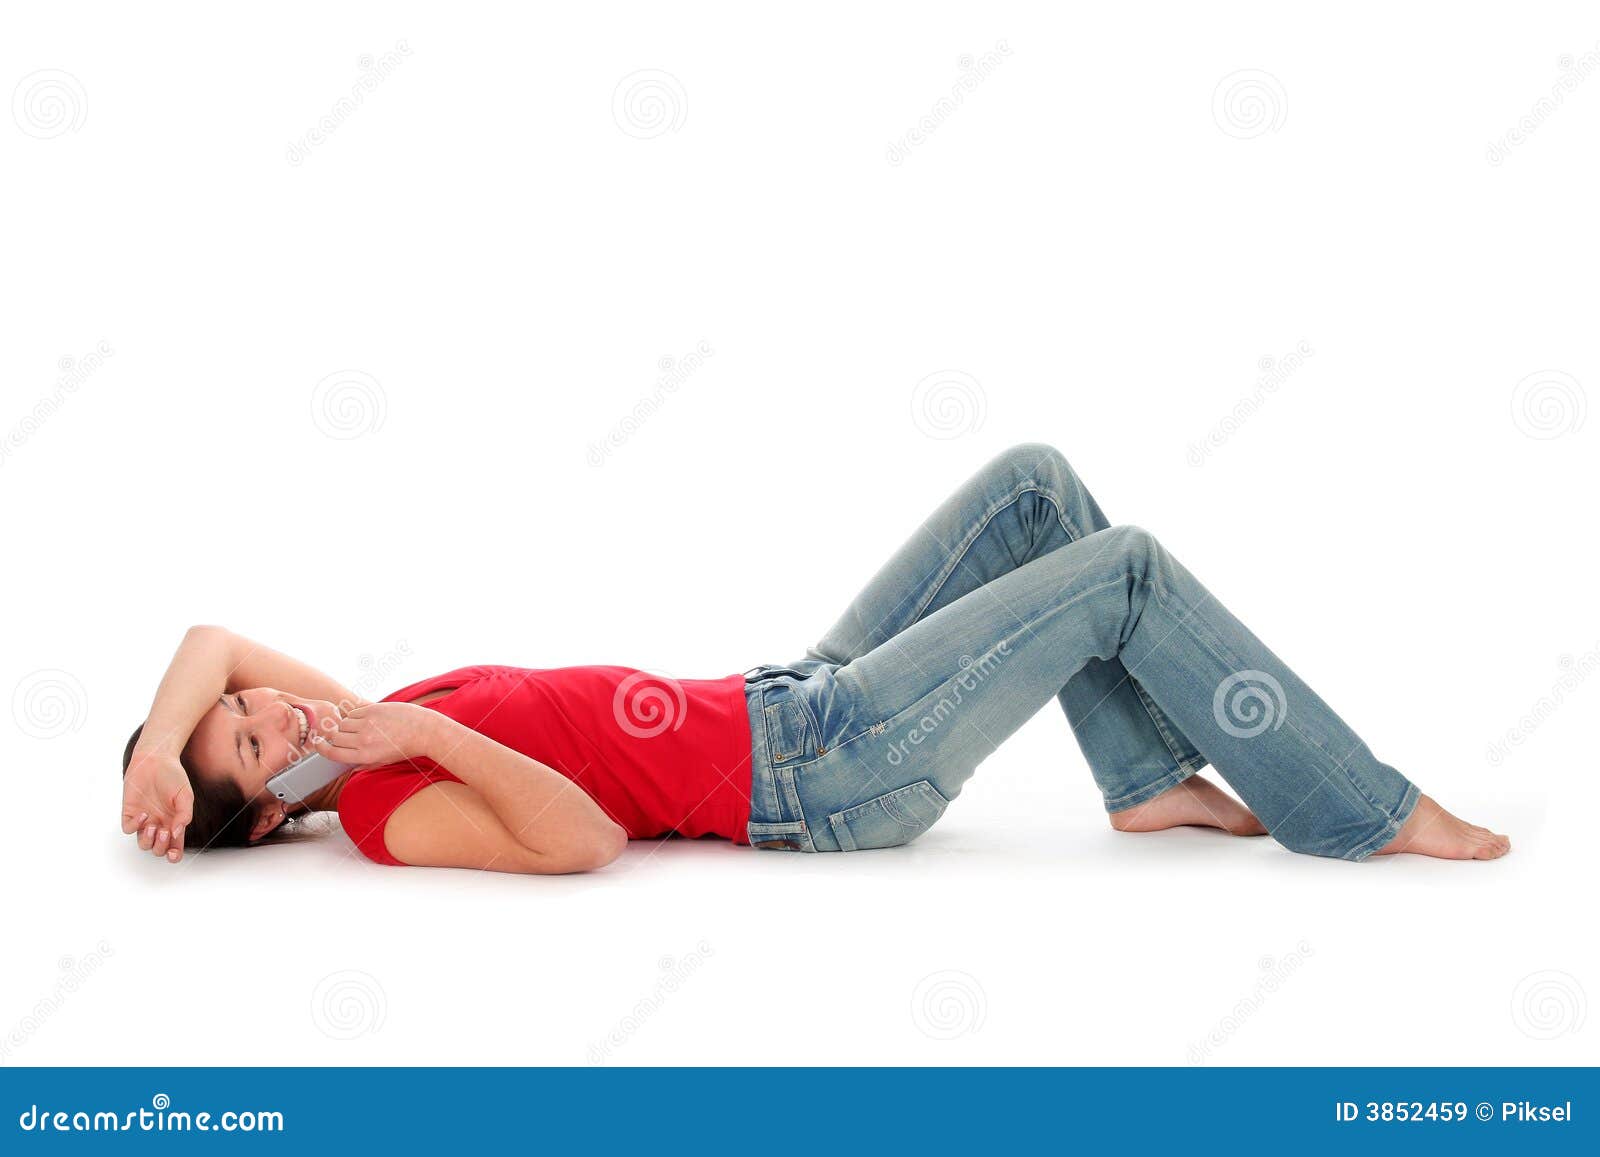 young woman lying down